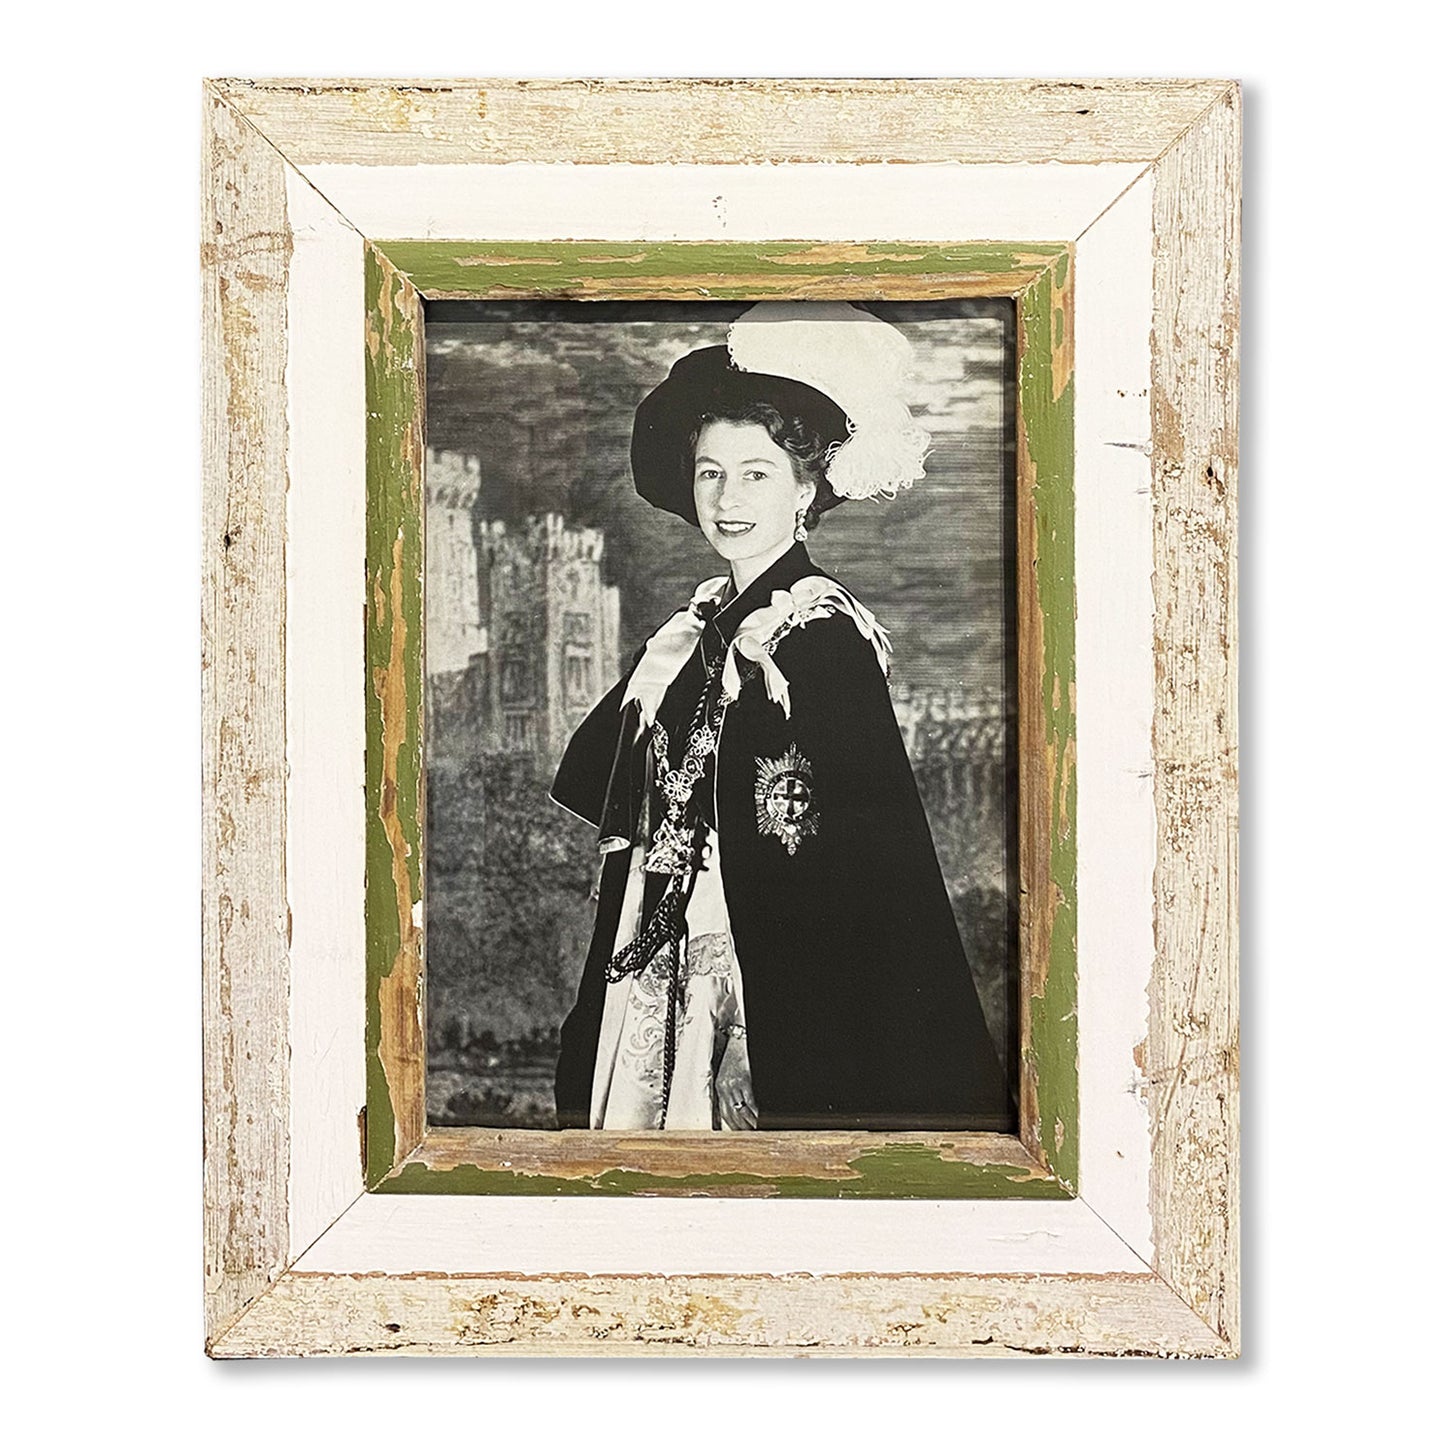 Immagine Regina Elisabetta in cornice legno antico.